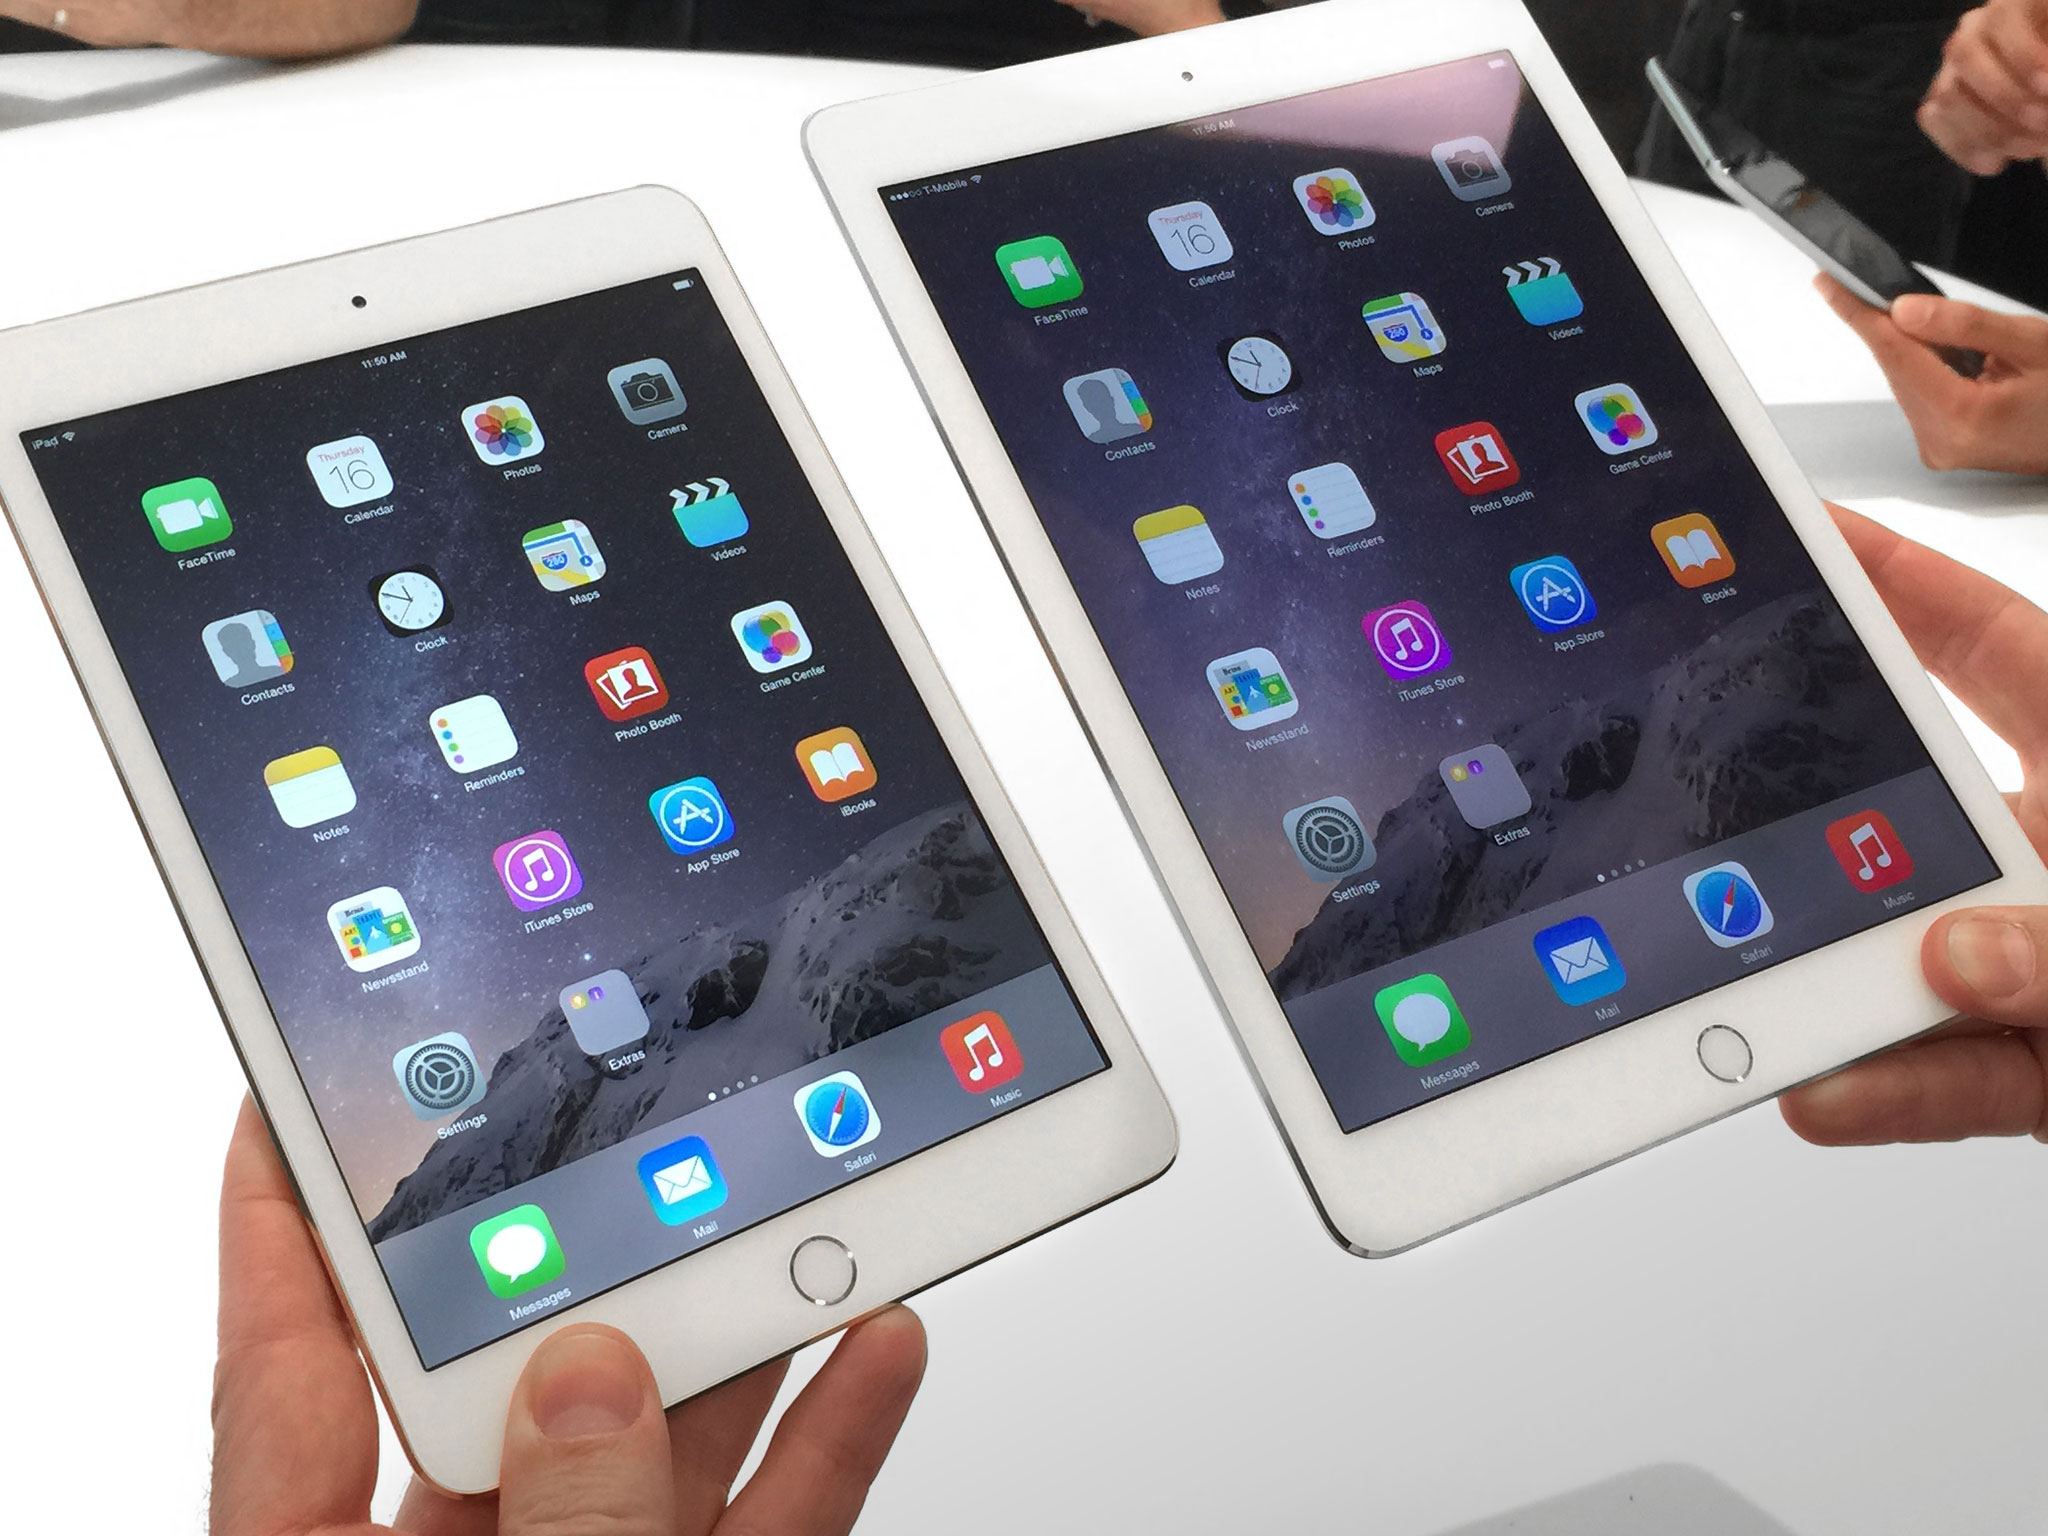 Should you upgrade to the iPad Air 2 and iPad mini 4? | iMore